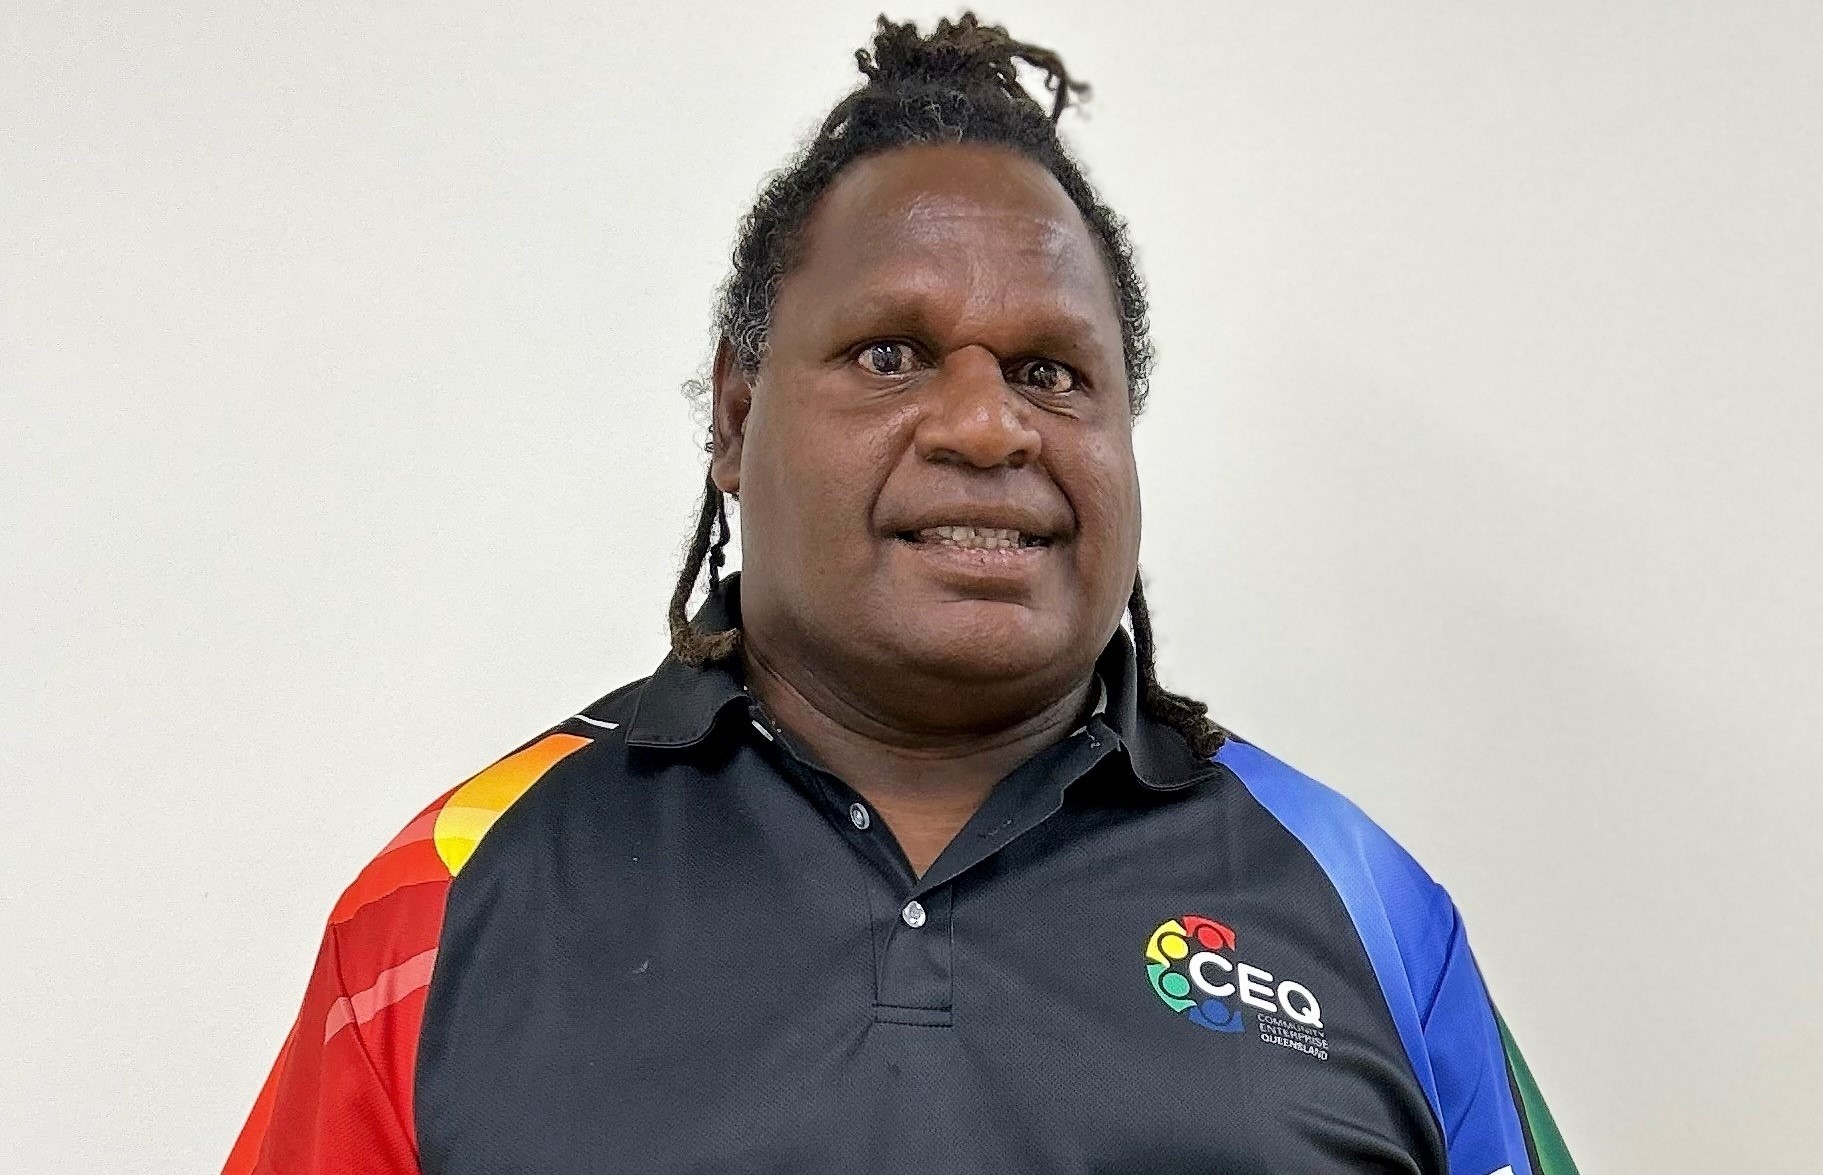 Torres Strait Islander leader Bosun joins CEQ to help drive community engagement and enterprise development